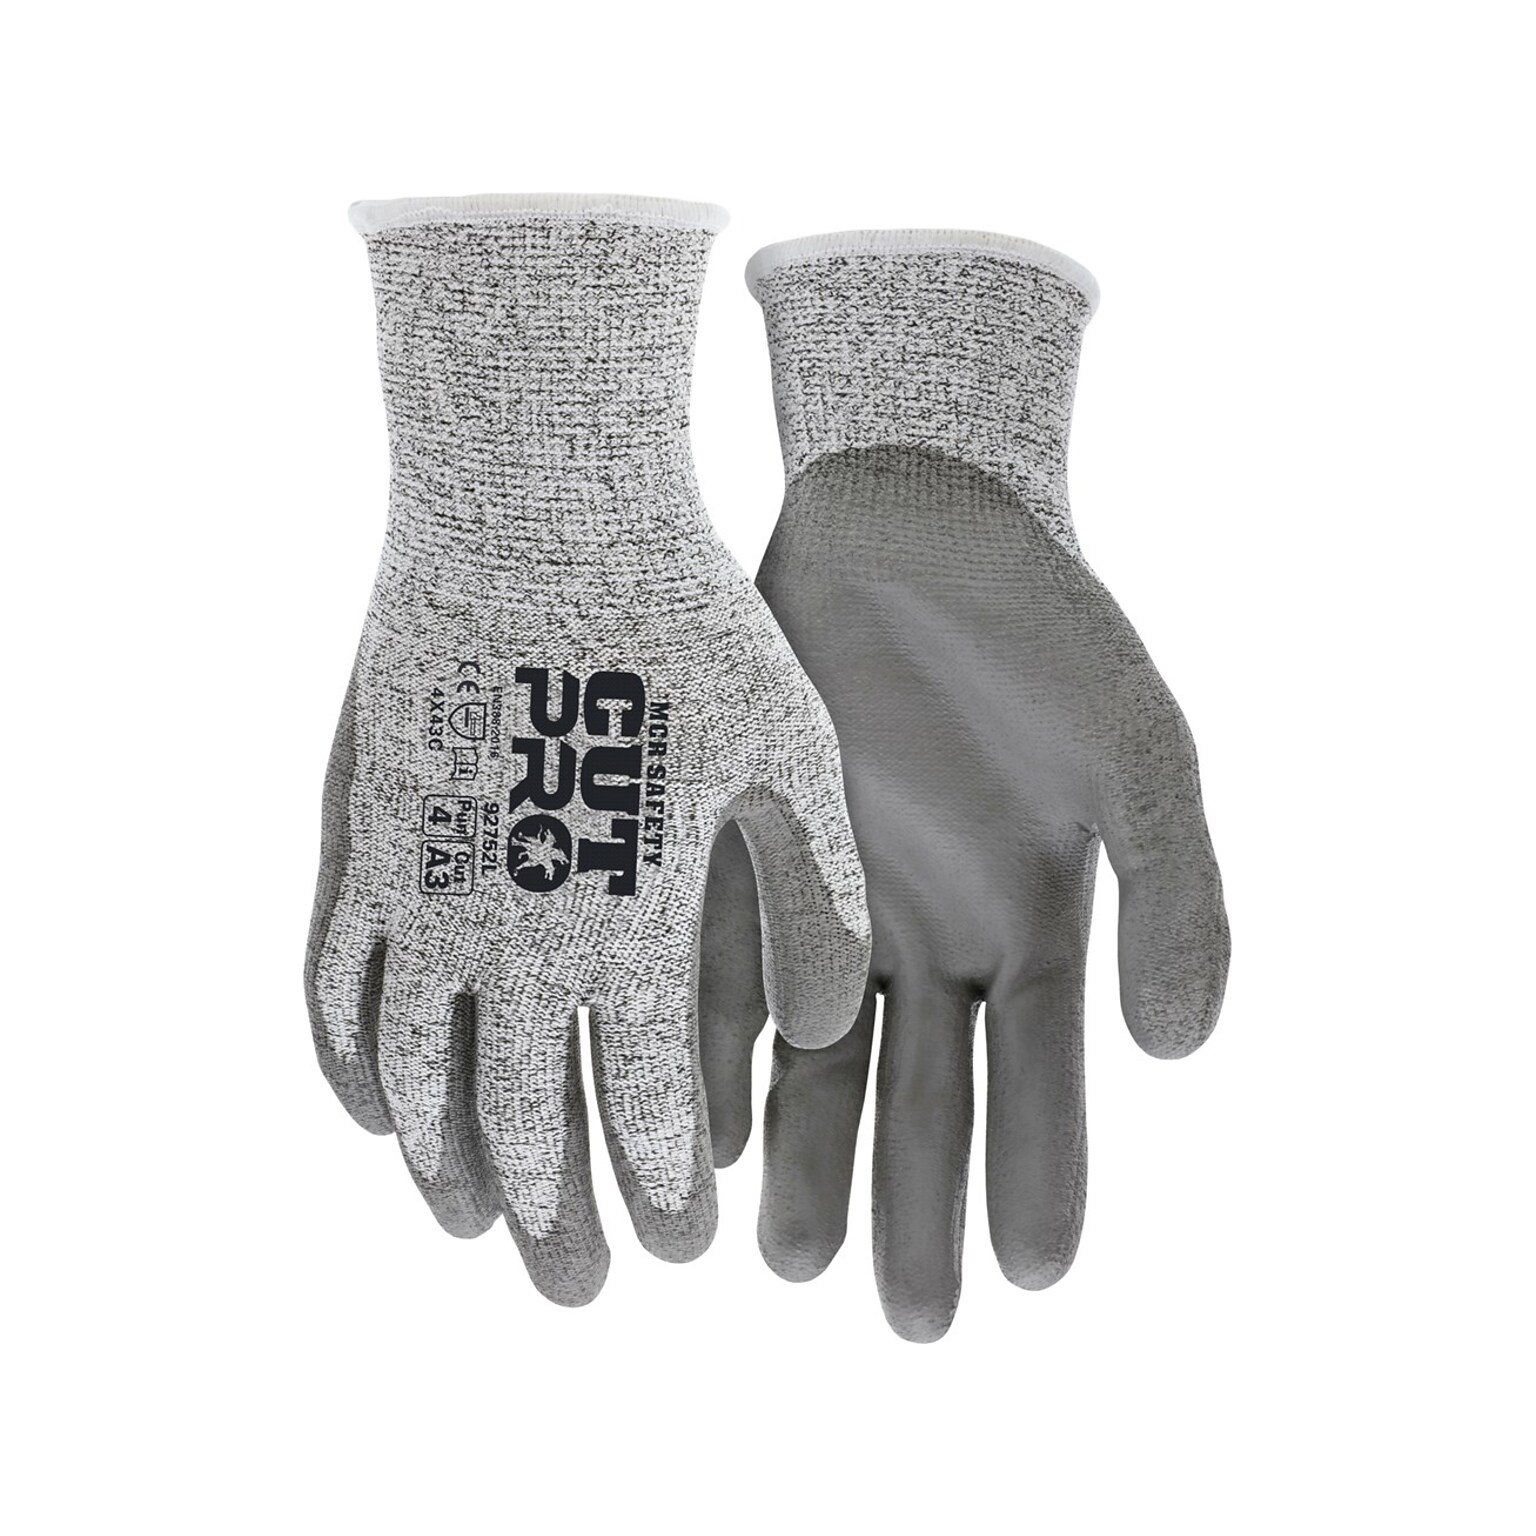 MCR Safety Cut Pro Hypermax Fiber/Polyurethane Work Gloves, Medium, A3 Cut Level, Salt-and-Pepper/Gray, Dozen (92752M)